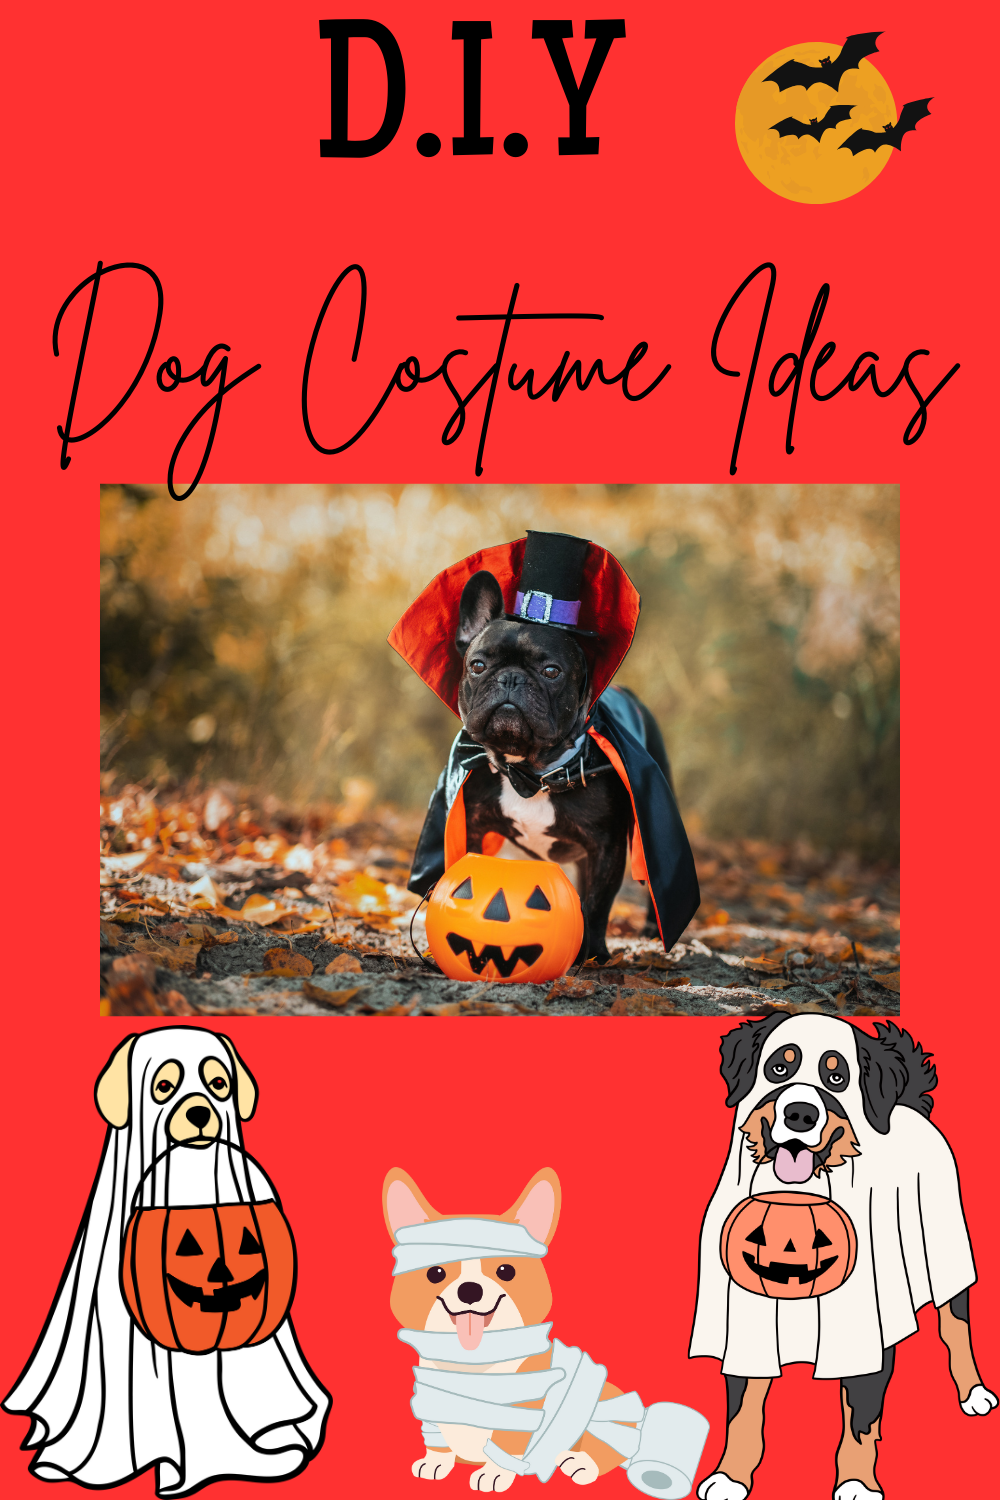 DIY Halloween Dog Costume Ideas